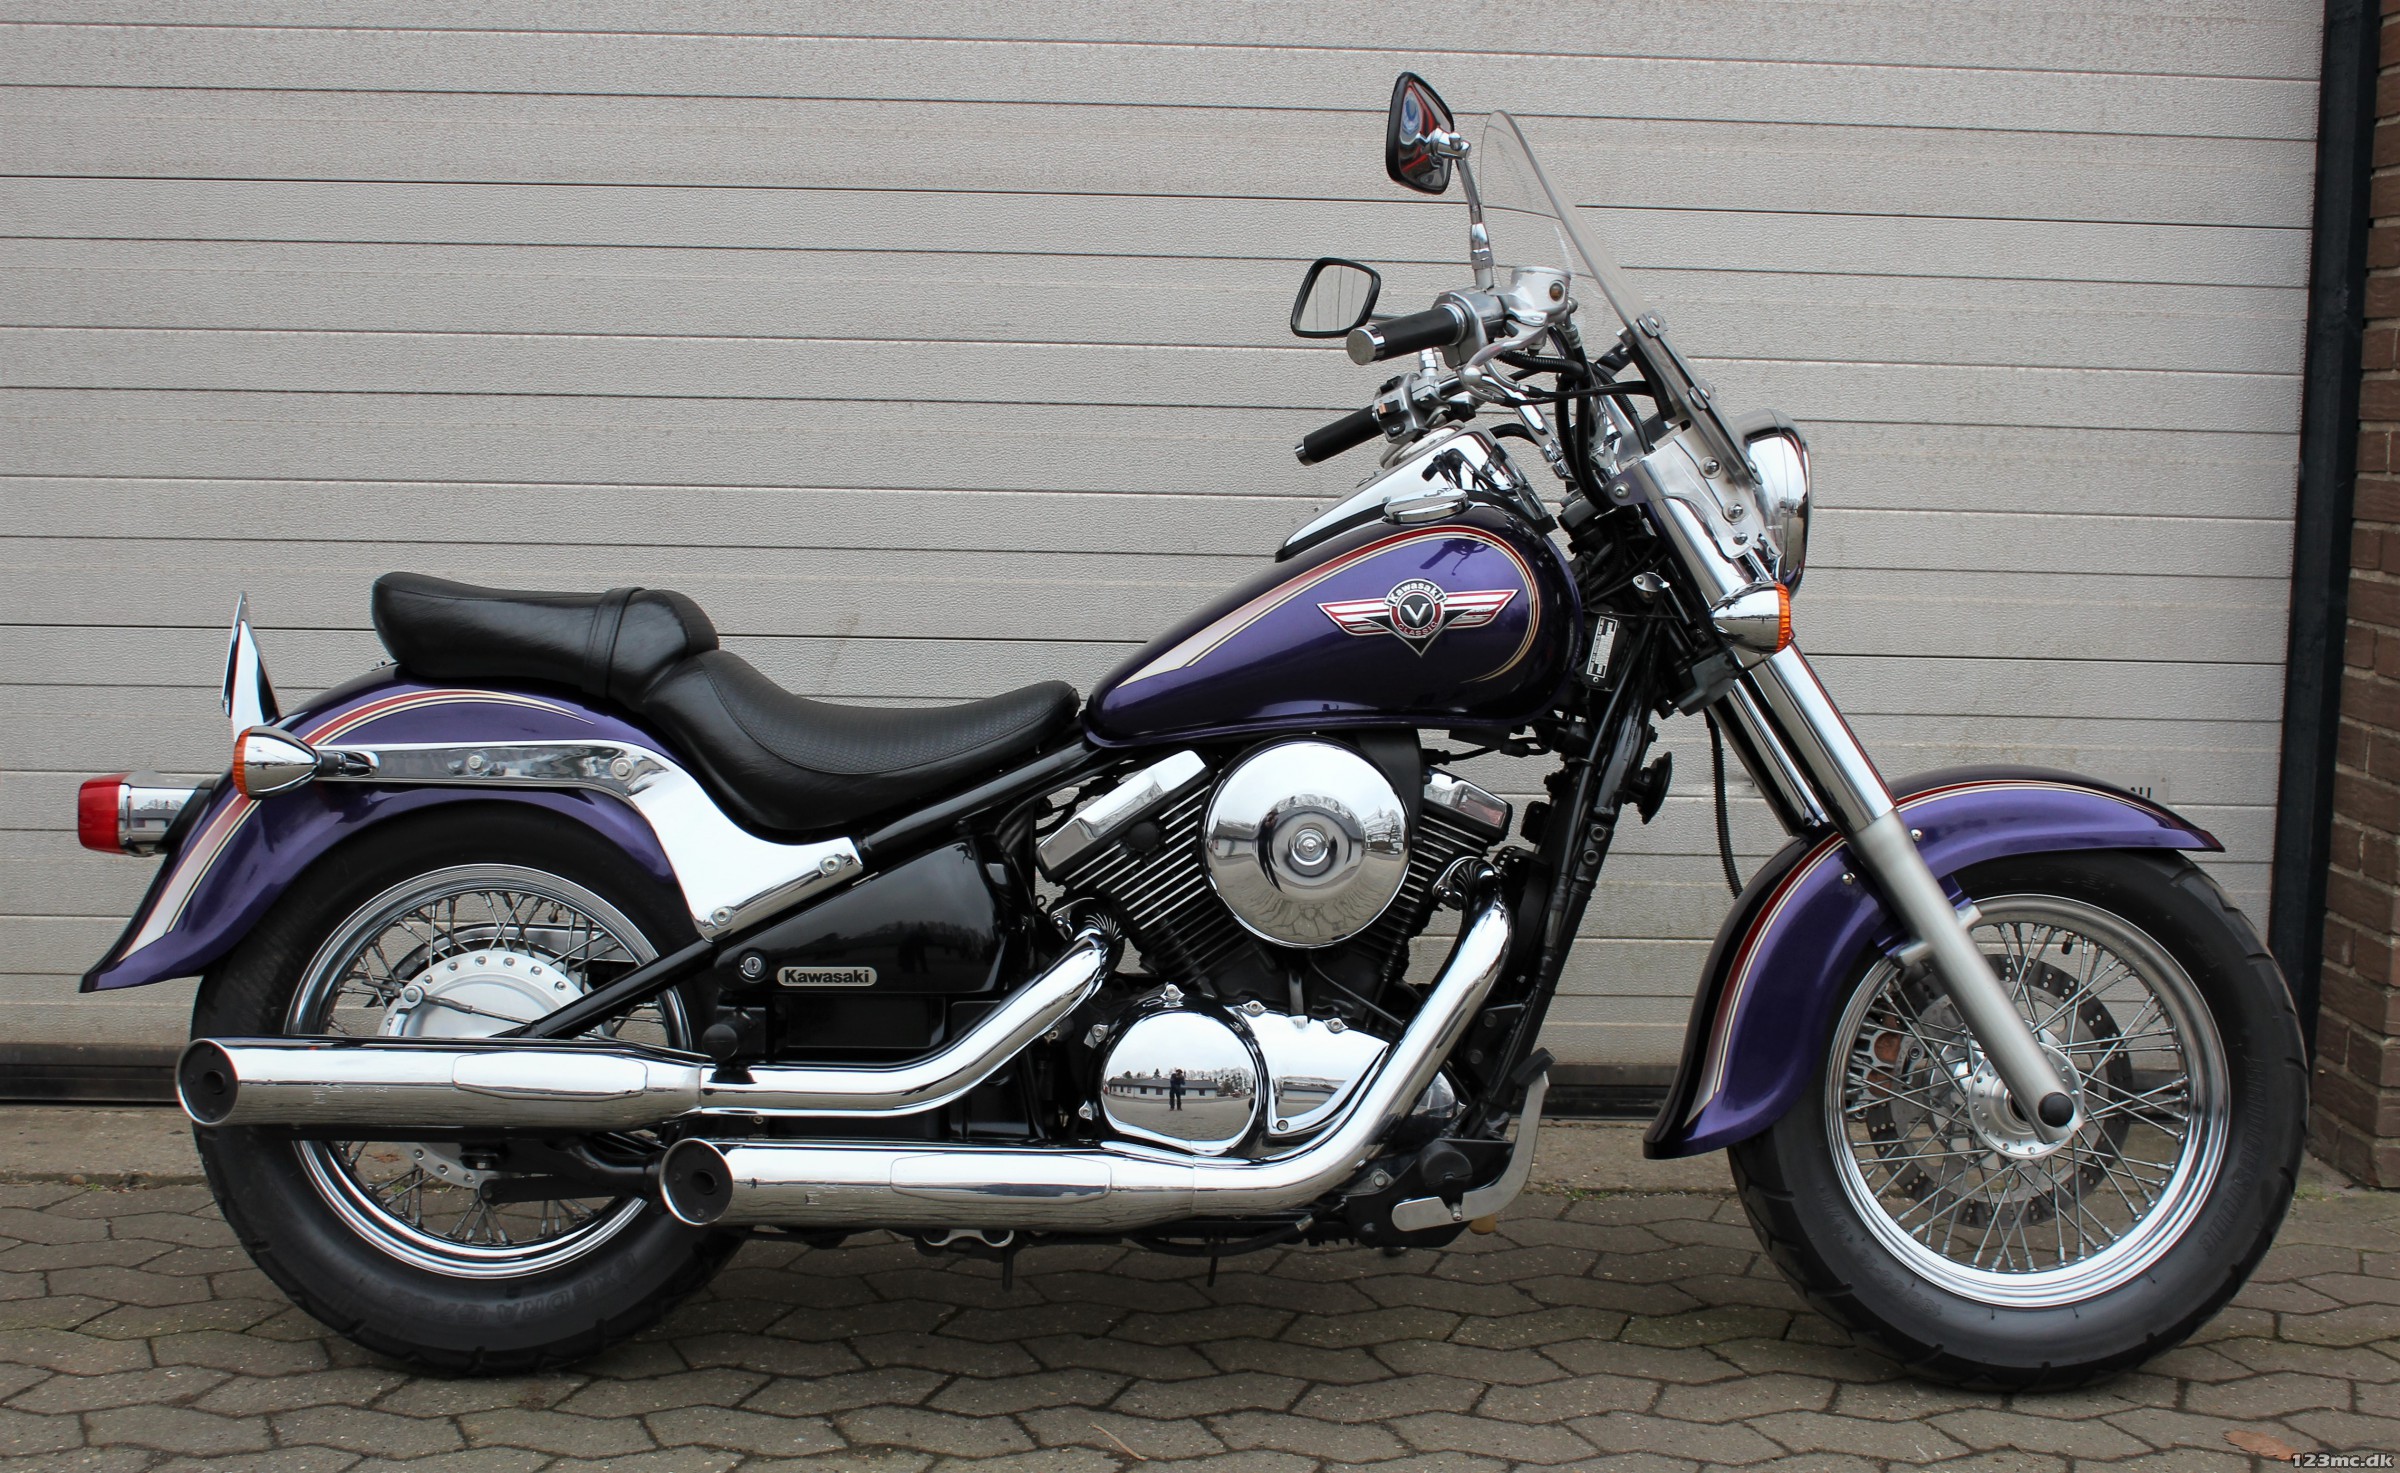 Мотоцикл kawasaki w400 — это ретро-классический мотоцикл